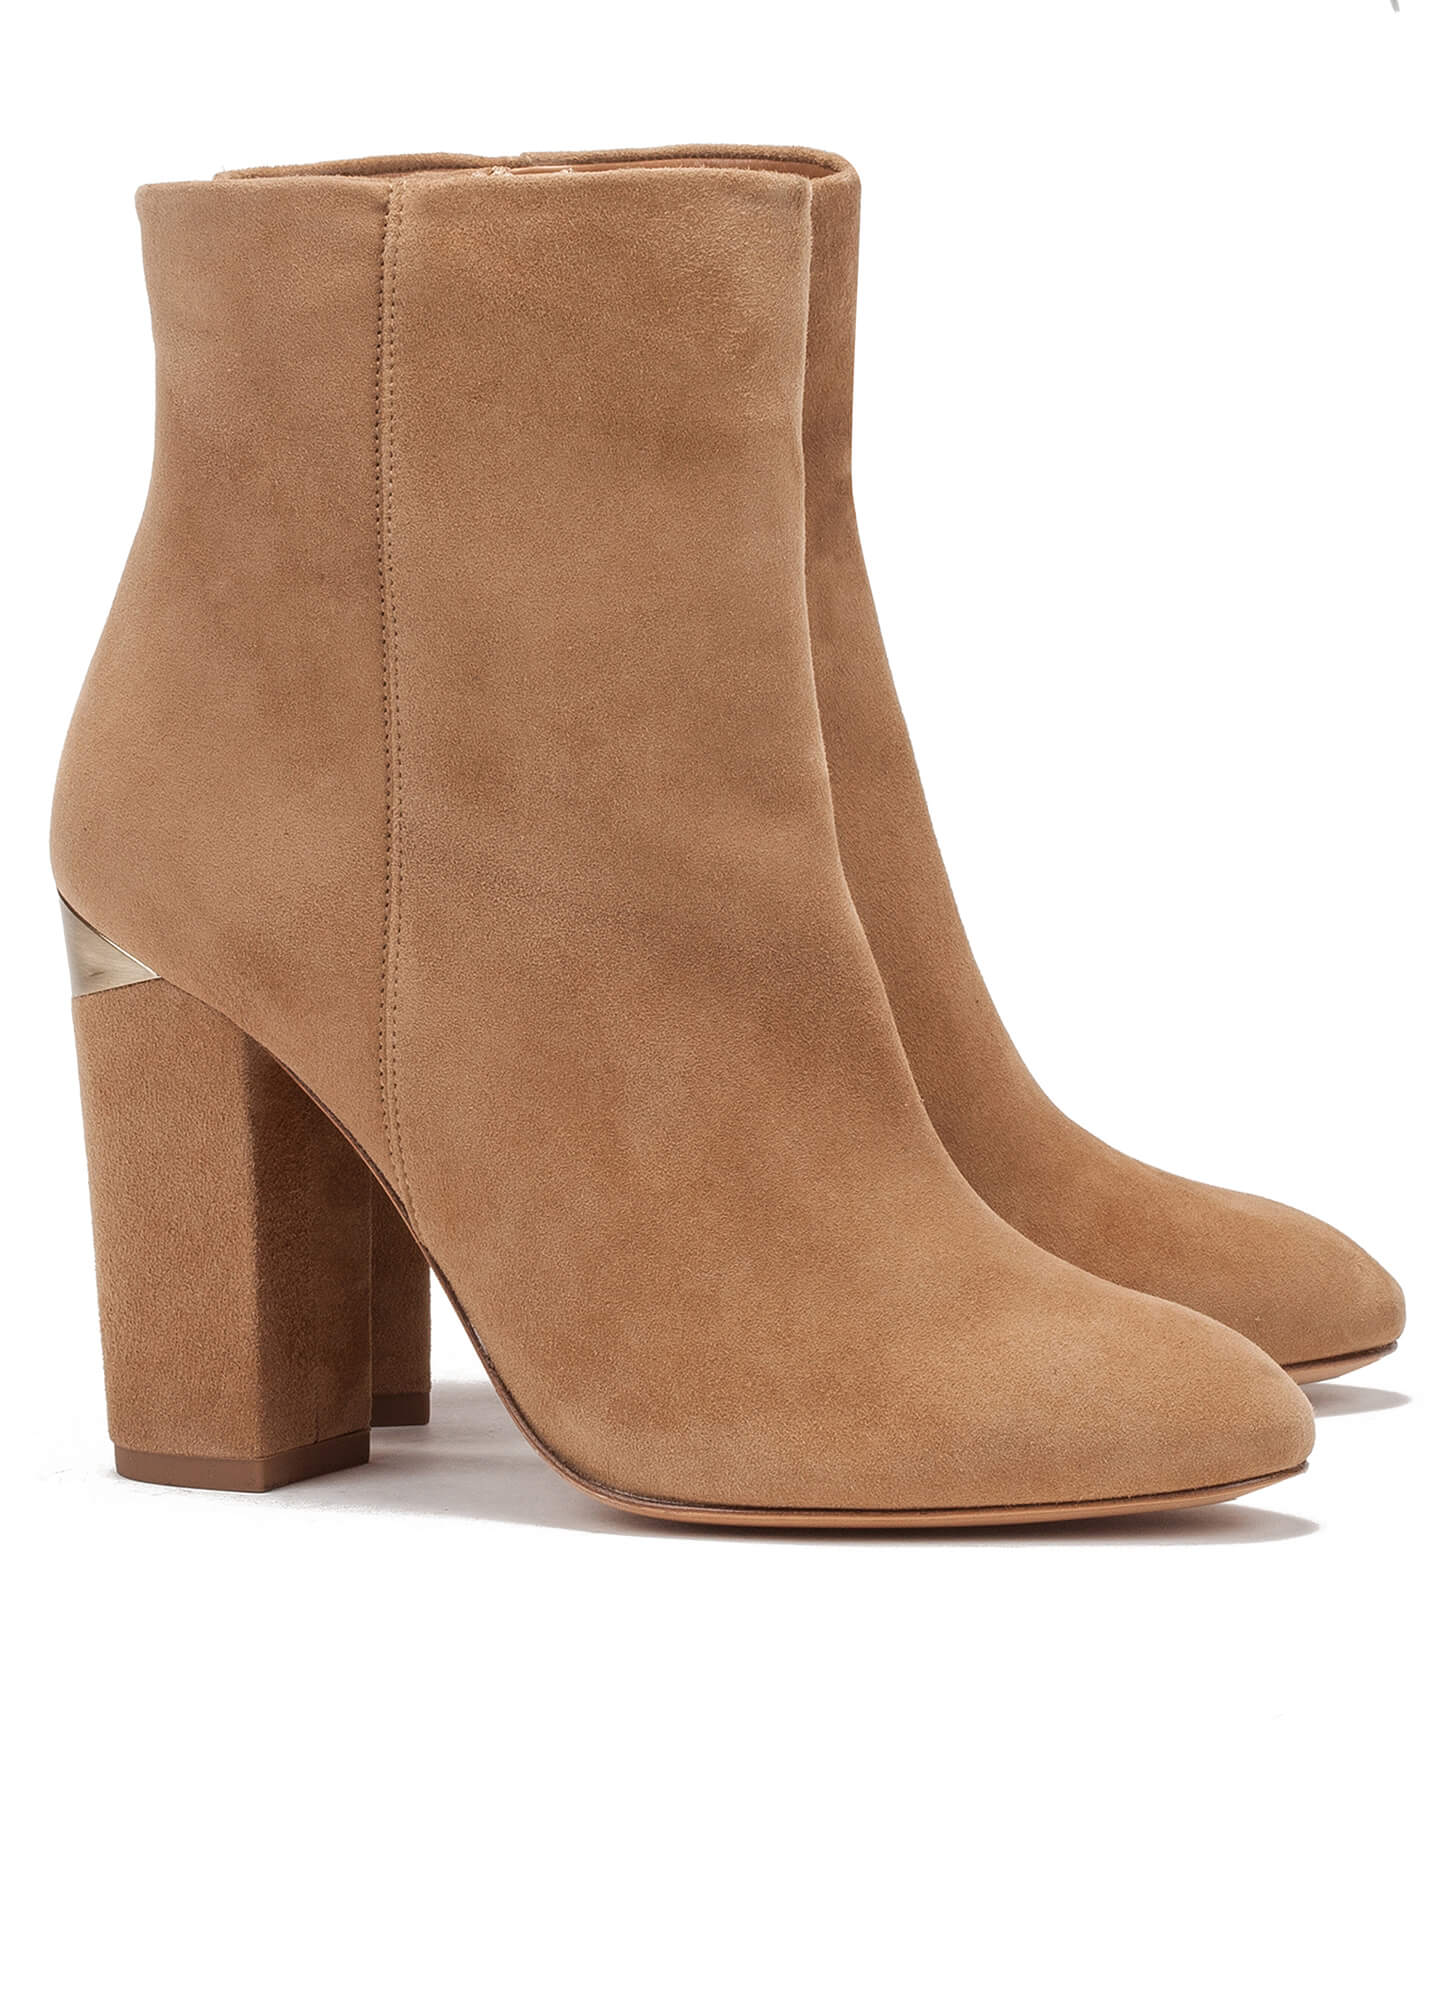 Camel high block heel ankle boots - online shoe store Pura Lopez . PURA ...